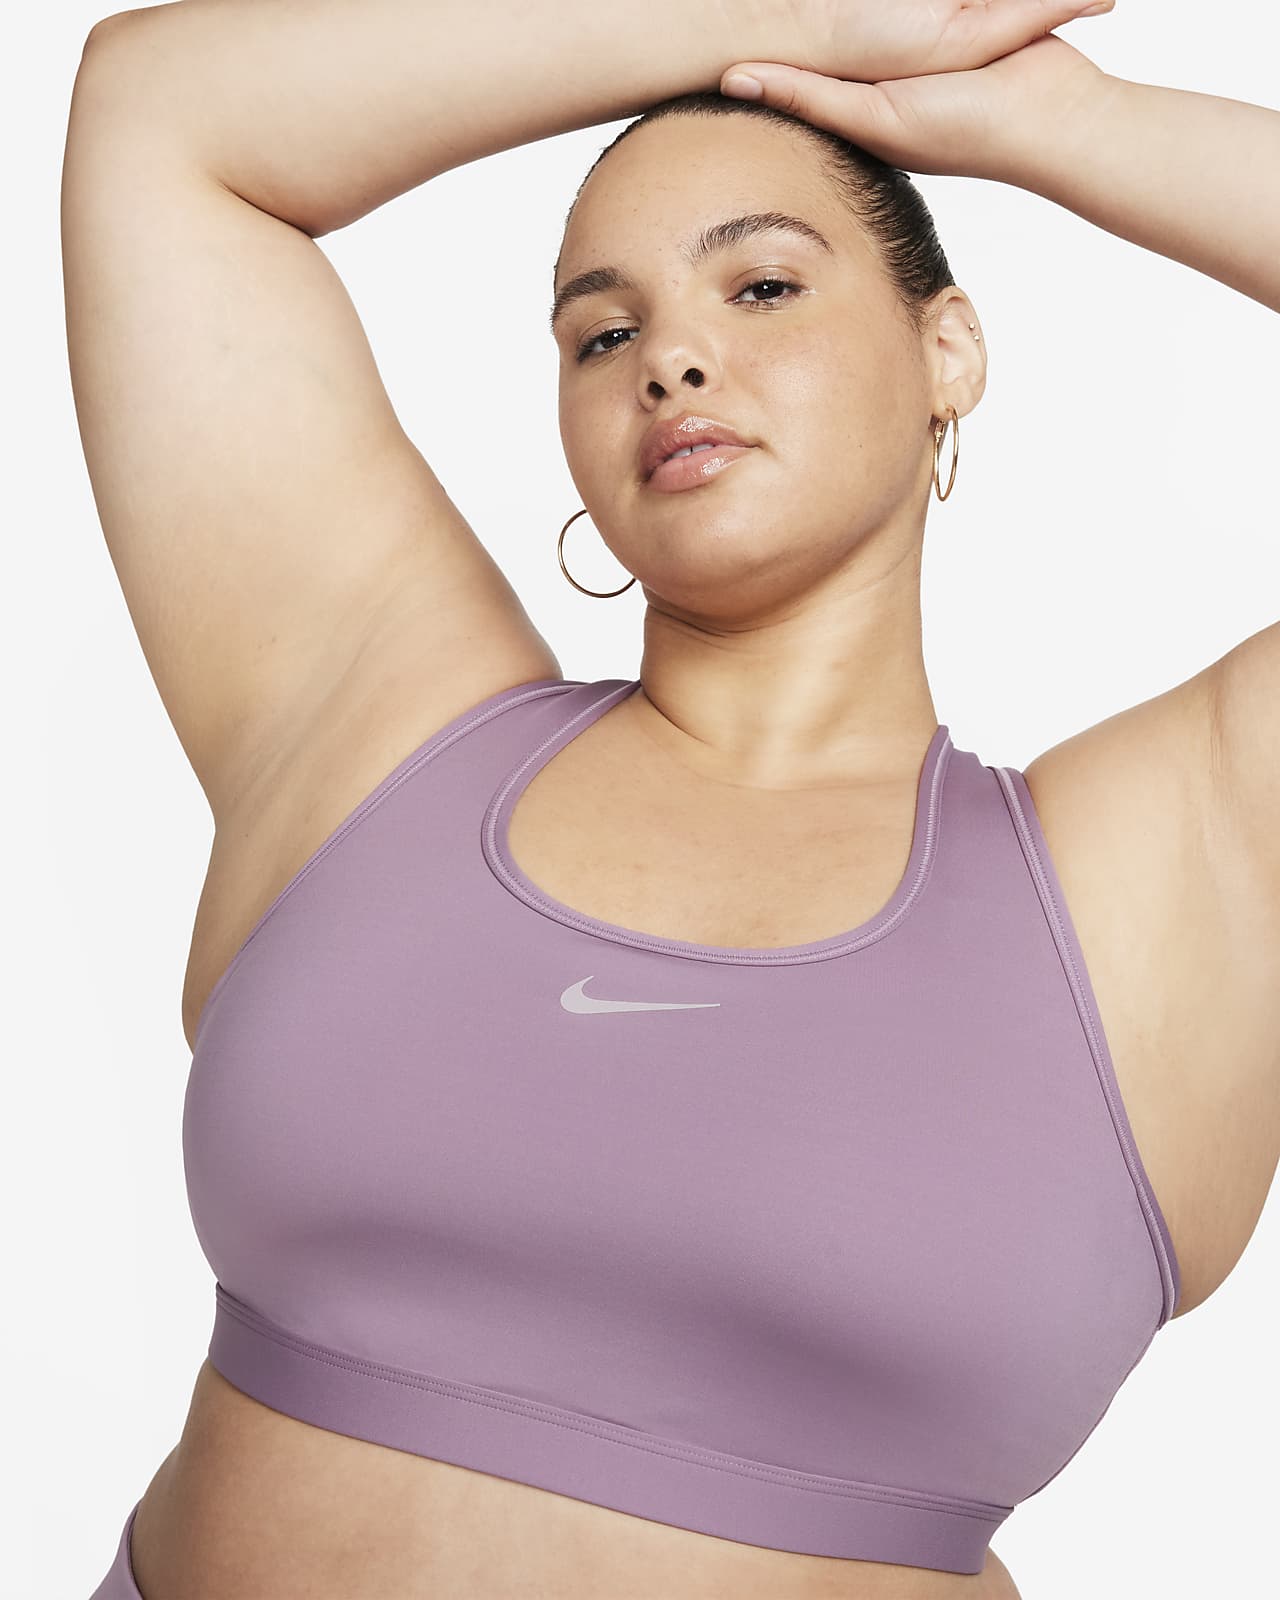 Medium Support Women's Padded Sports Bra Size). Nike.com